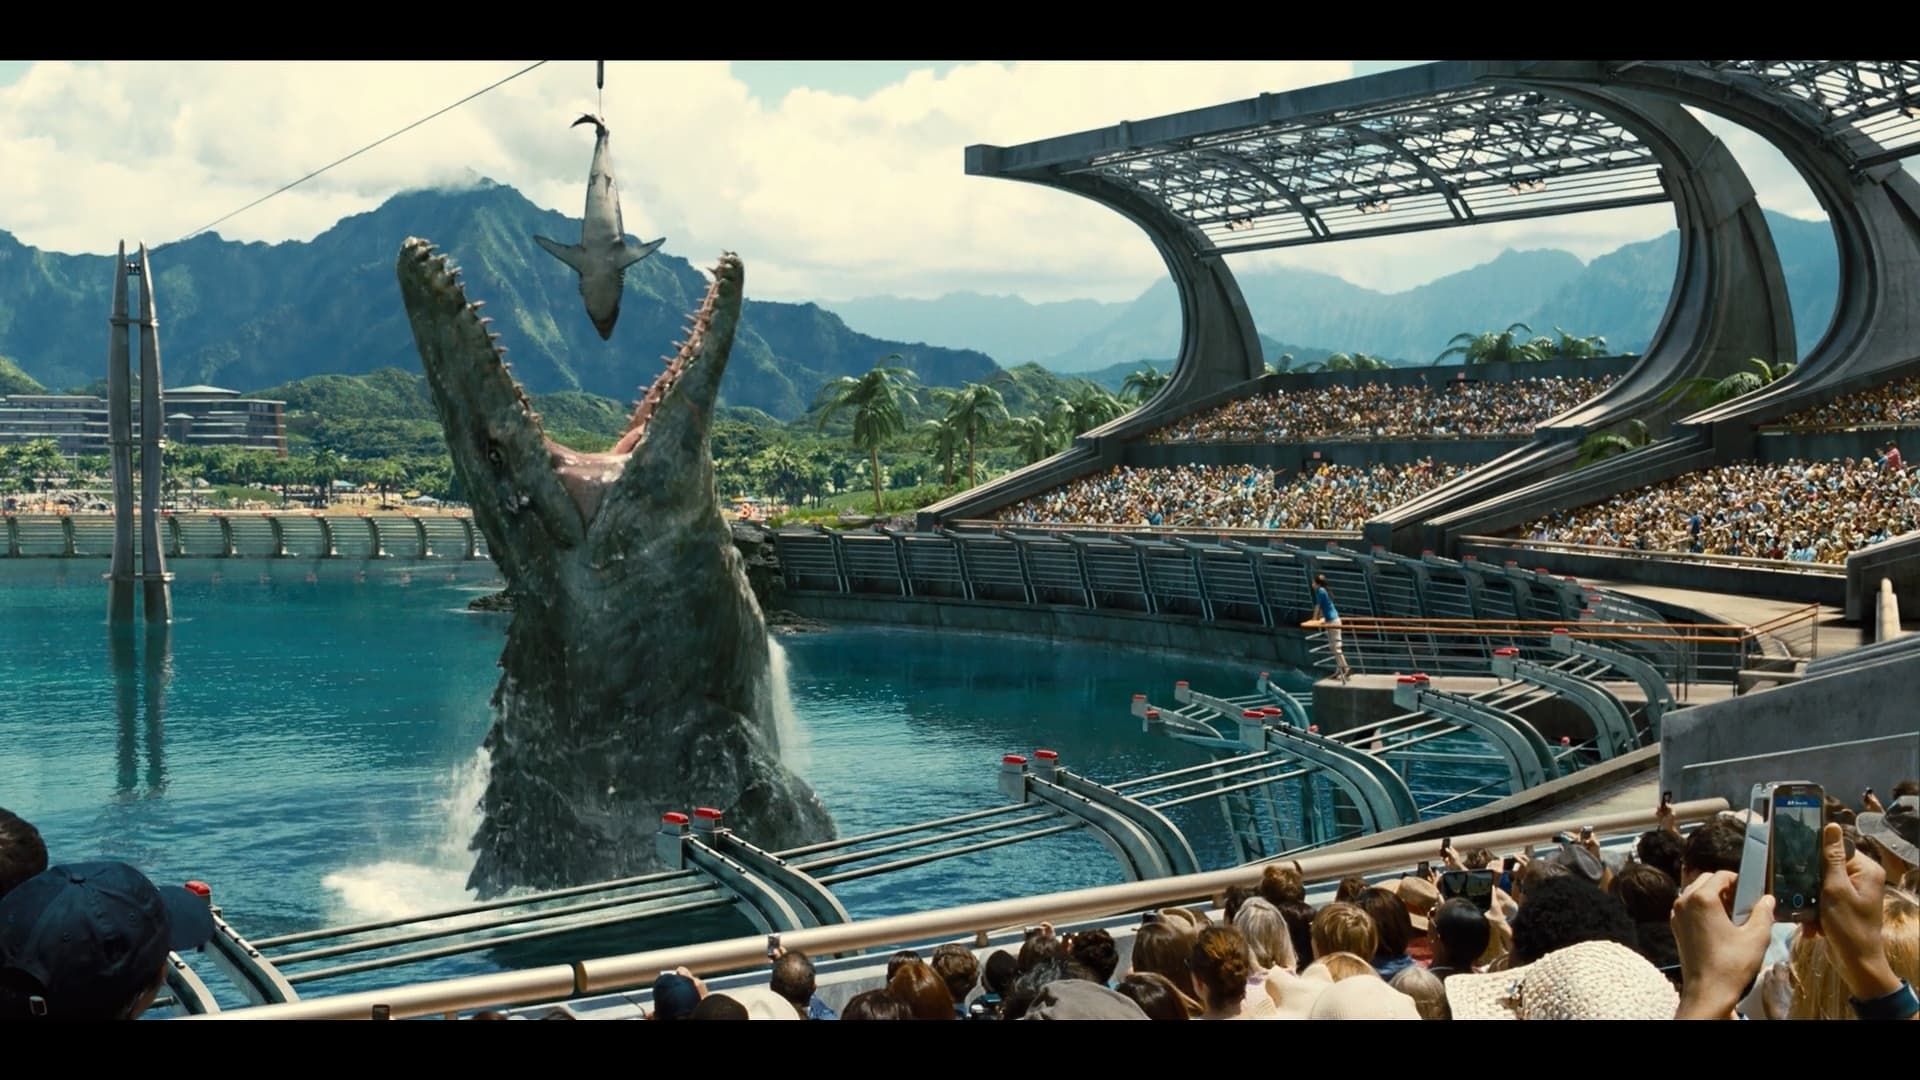 Image du film Jurassic World faj8bzt2yeef1xsargxd6yb4mfmjpg